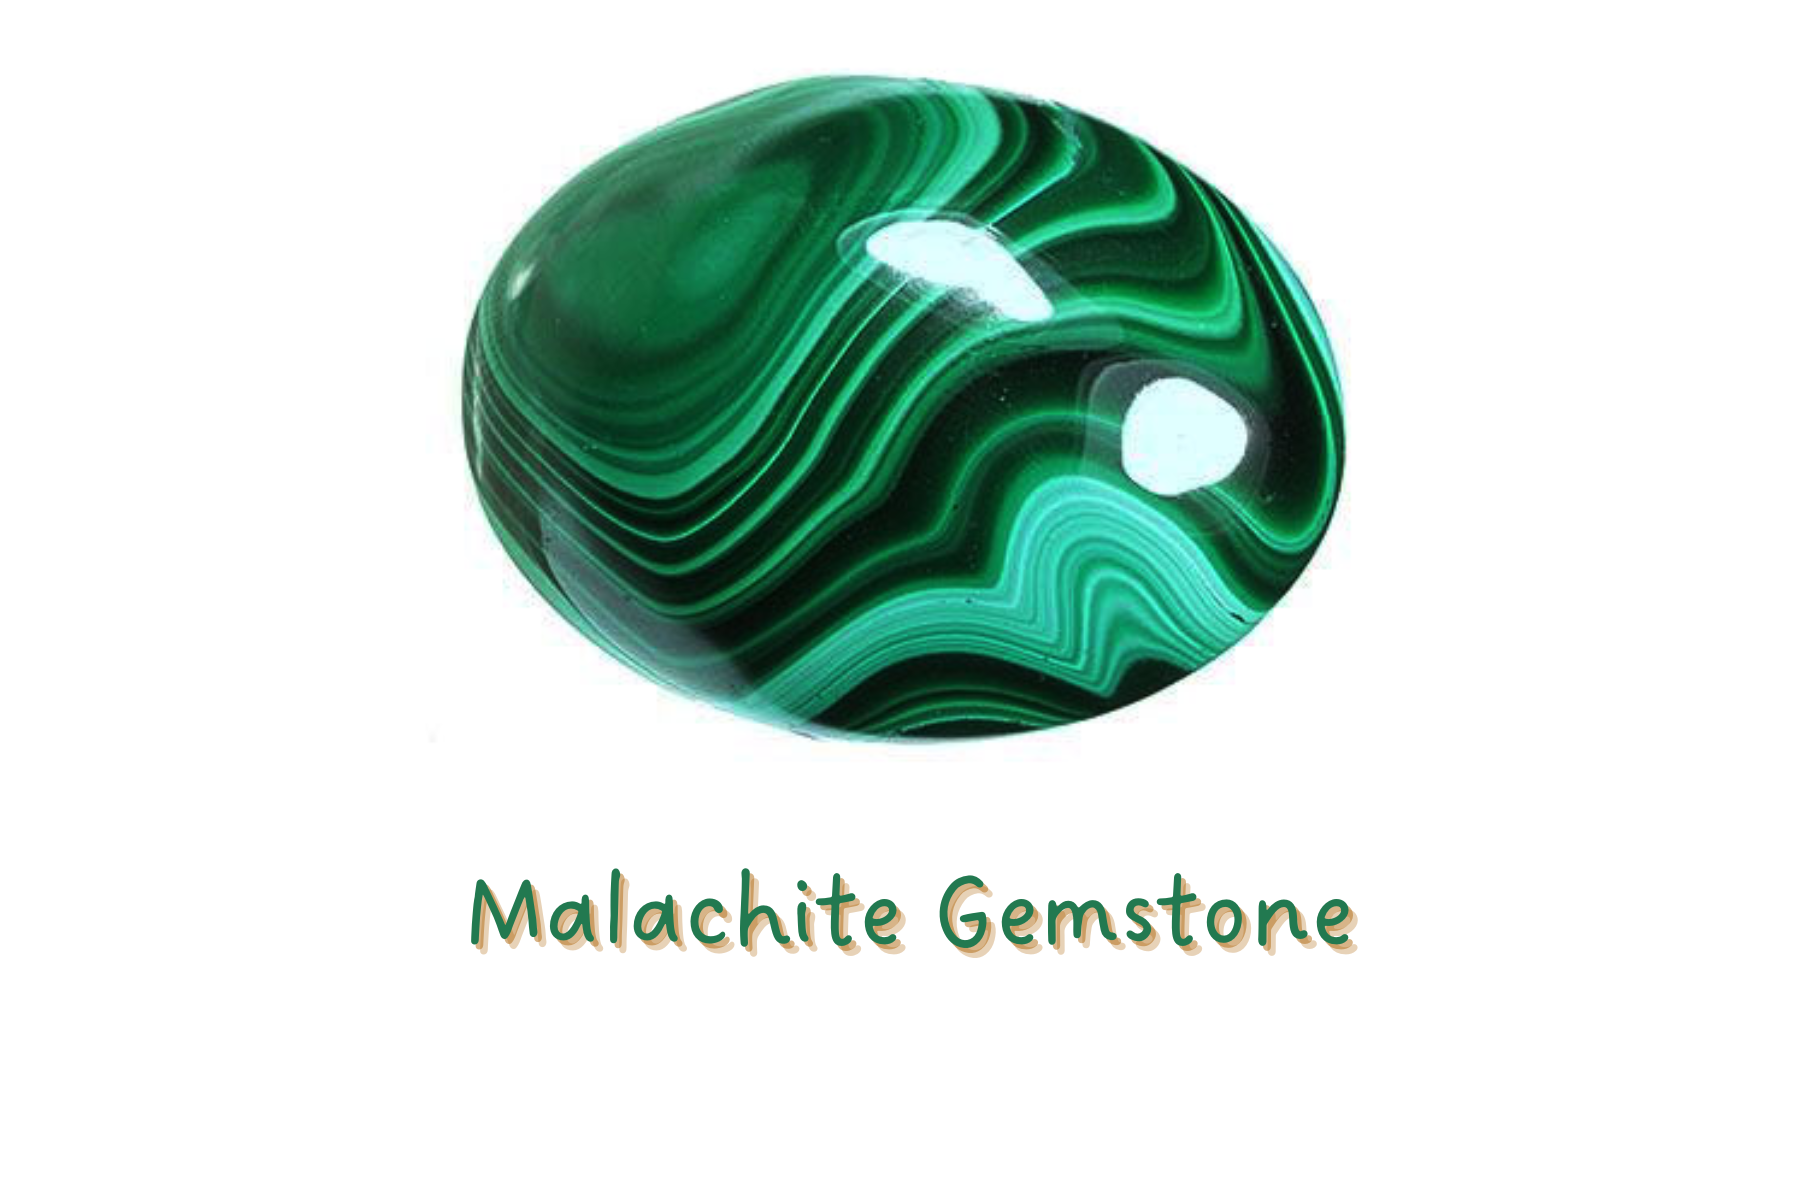 Striped oblong green Malachite stone